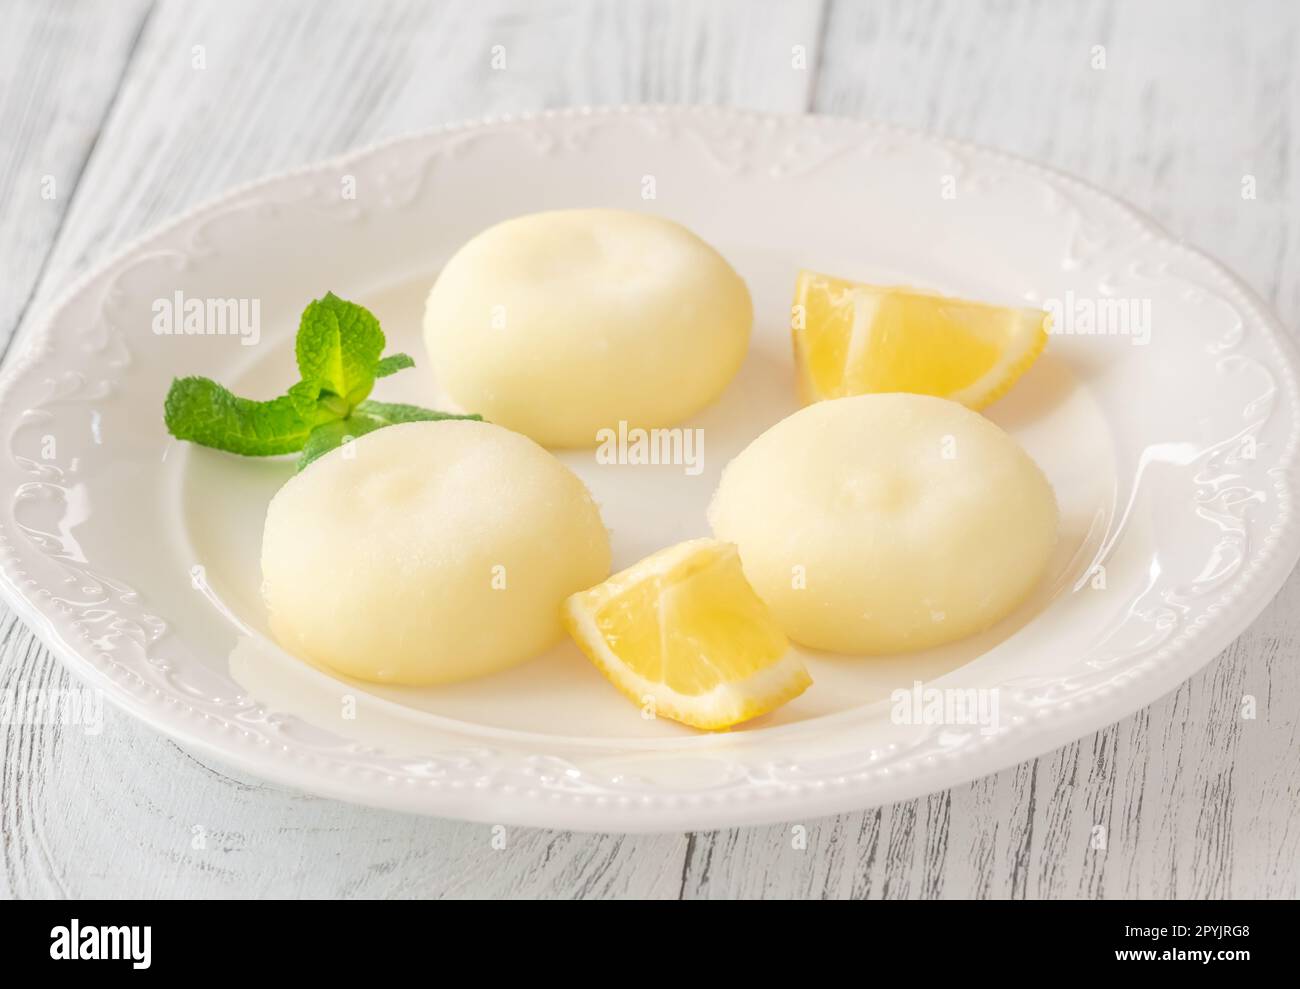 Lemon mochi - Japanese rice cake on the serving plate Stock Photo